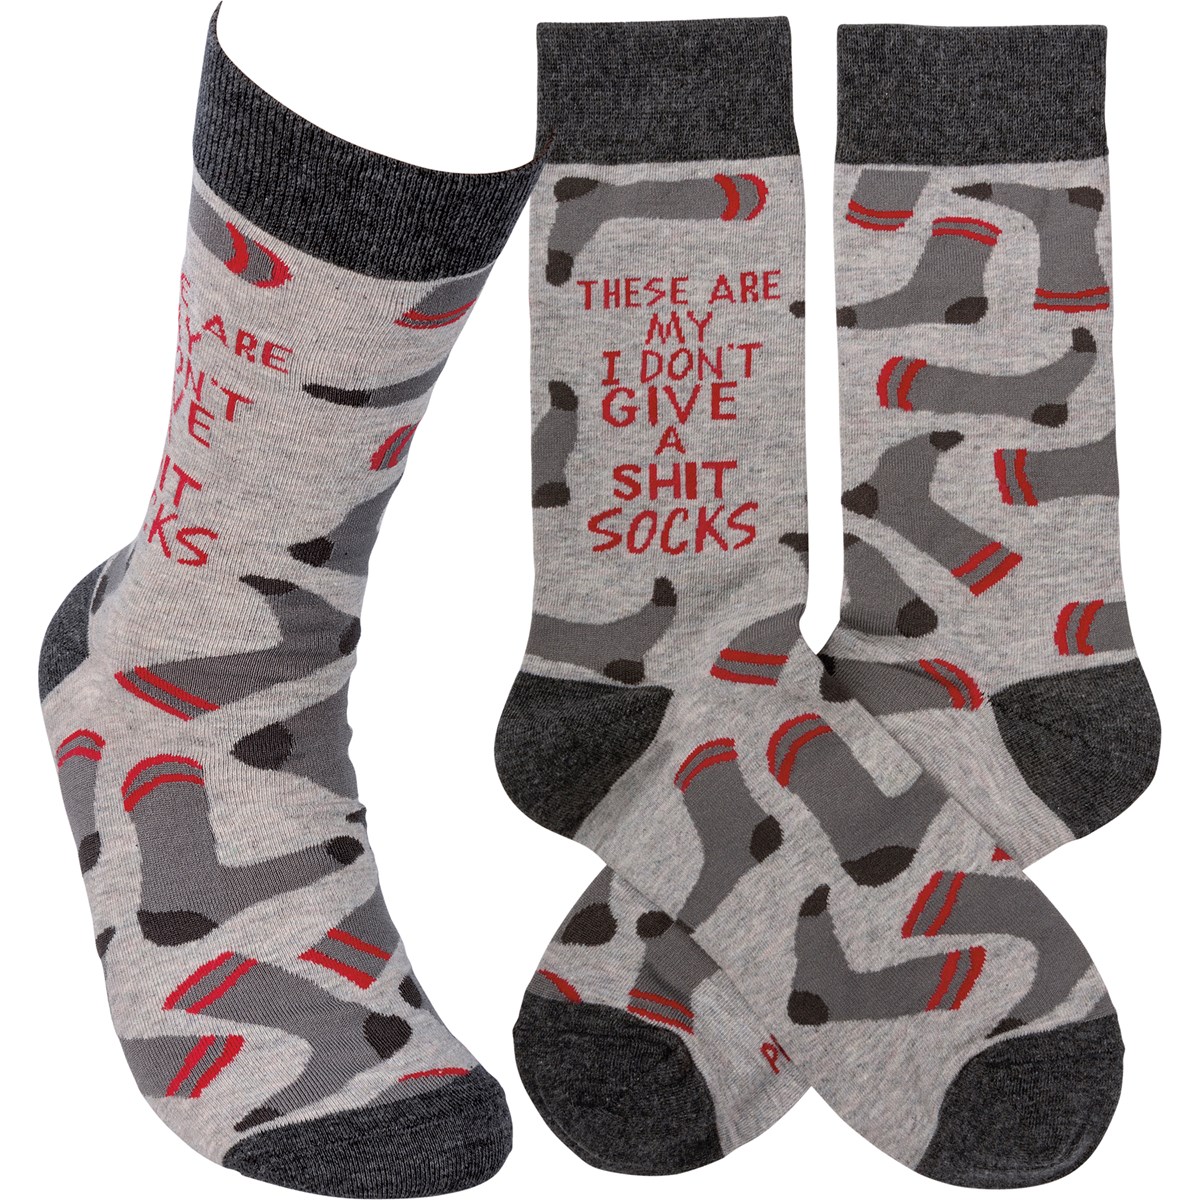 LOL Awesome & My Socks Quick Pick Kit - Cotton, Nylon, Spandex,Wood